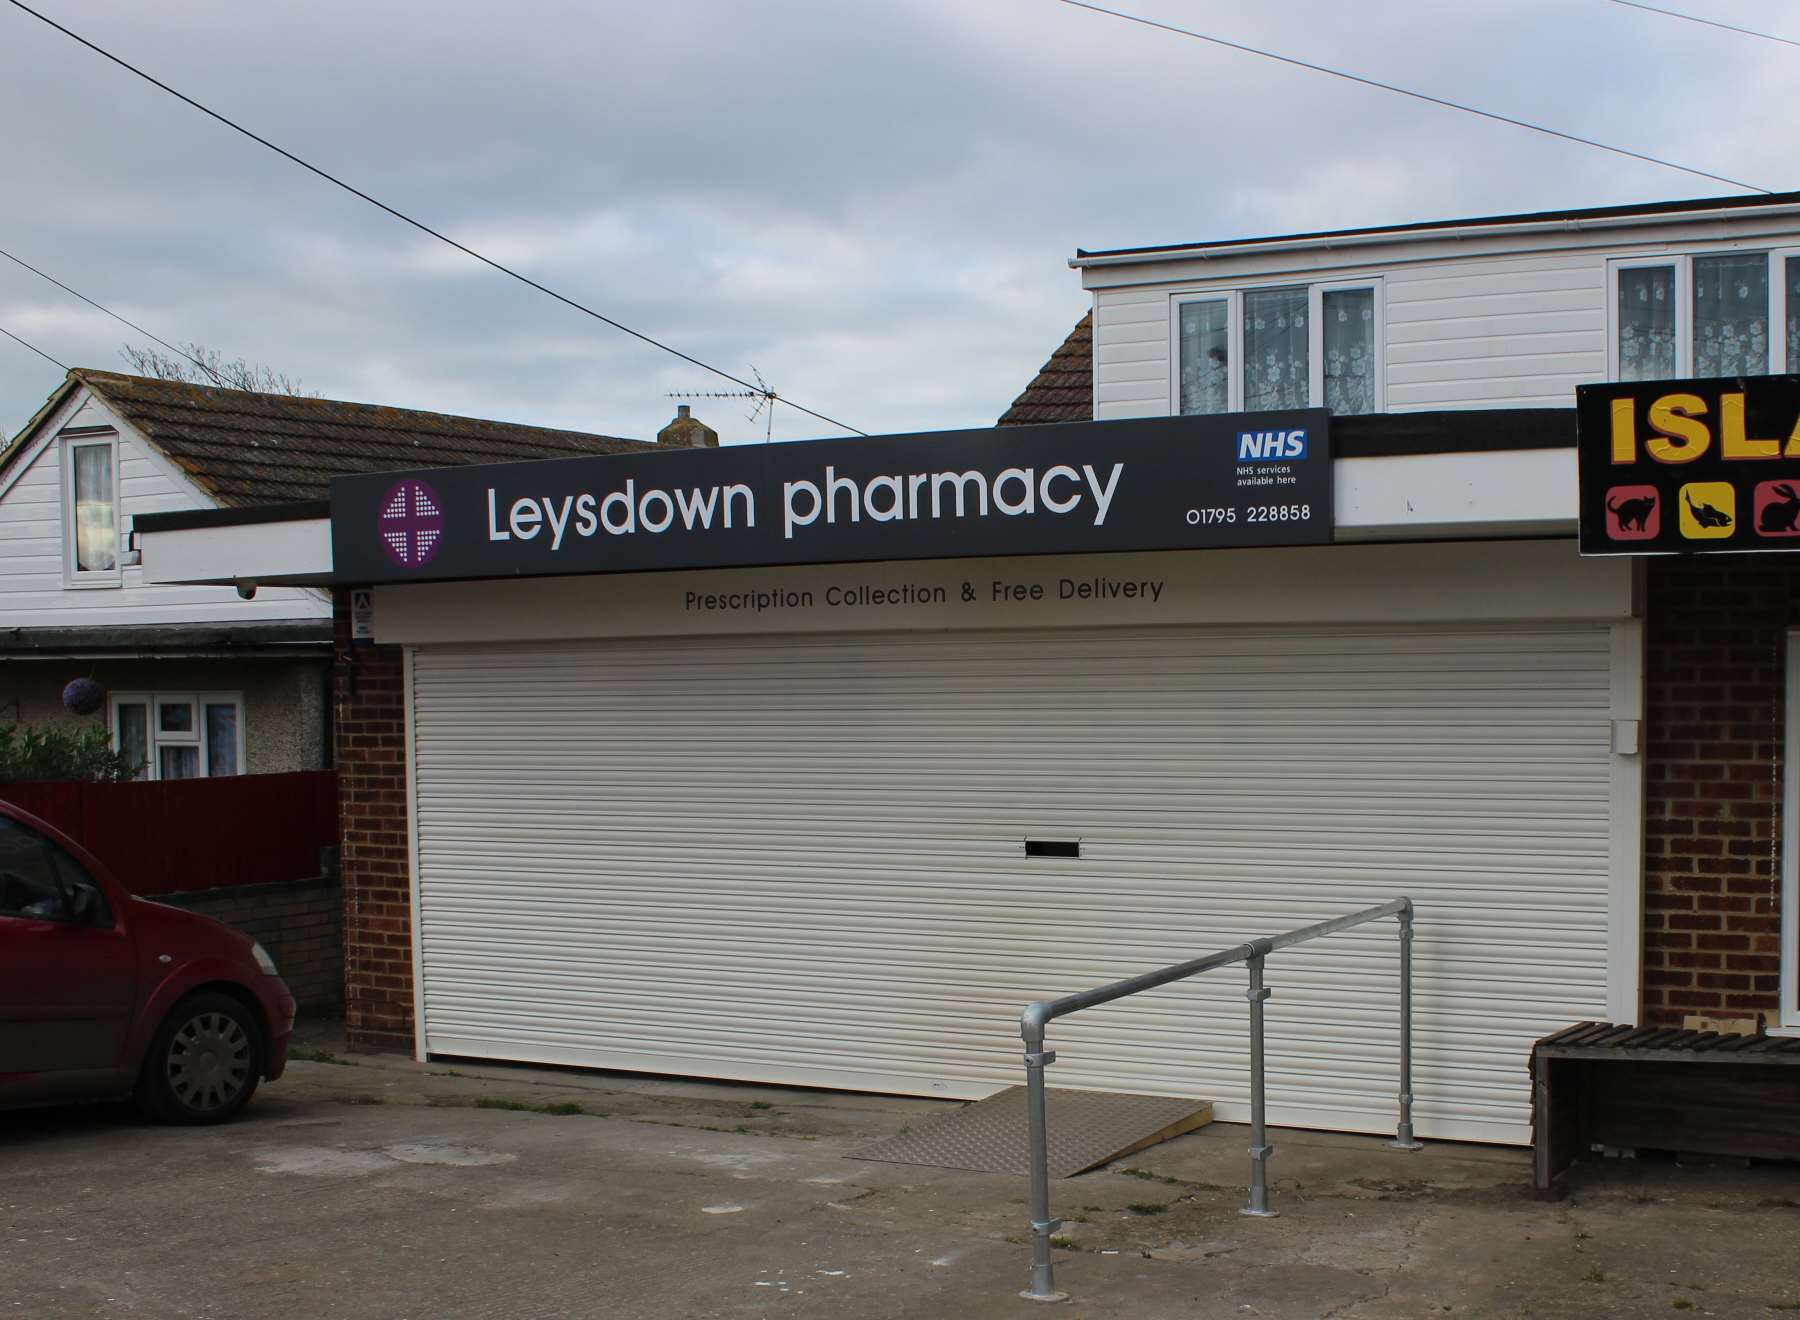 They new Leysdown Pharmacy is virtually opposite the doctors' Leysdown surgery